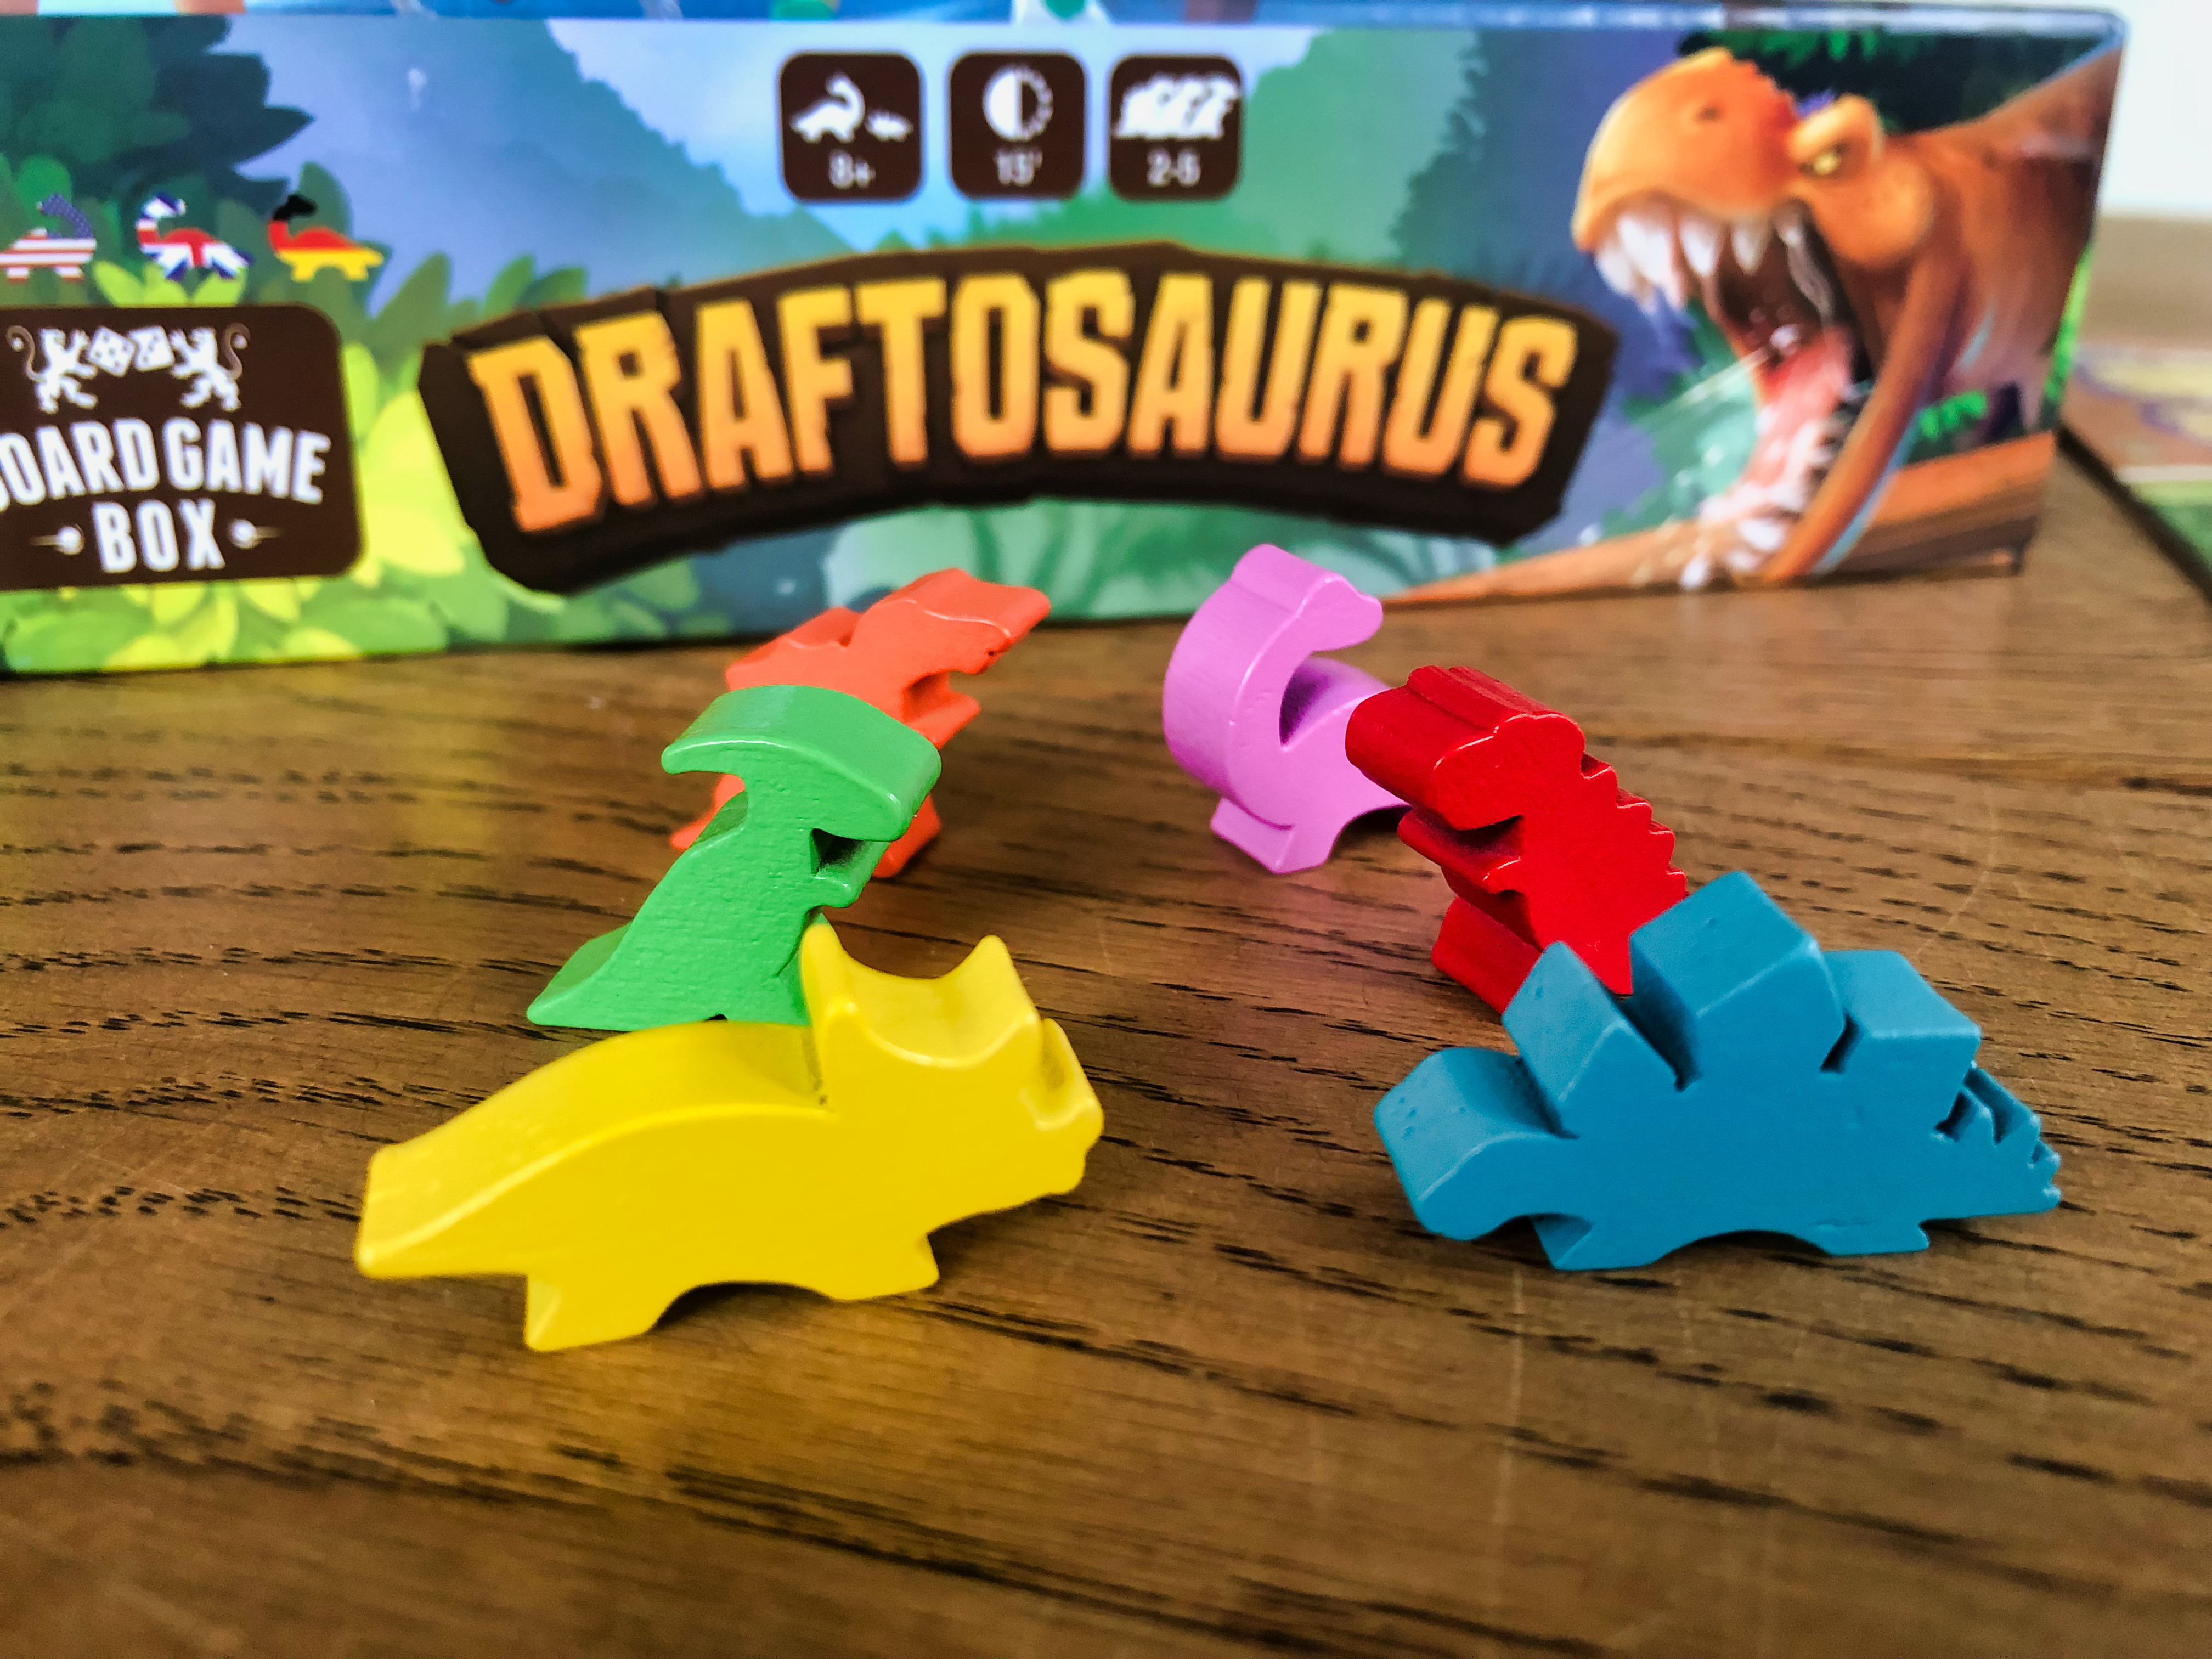 Game in a Minute: Draftosaurus